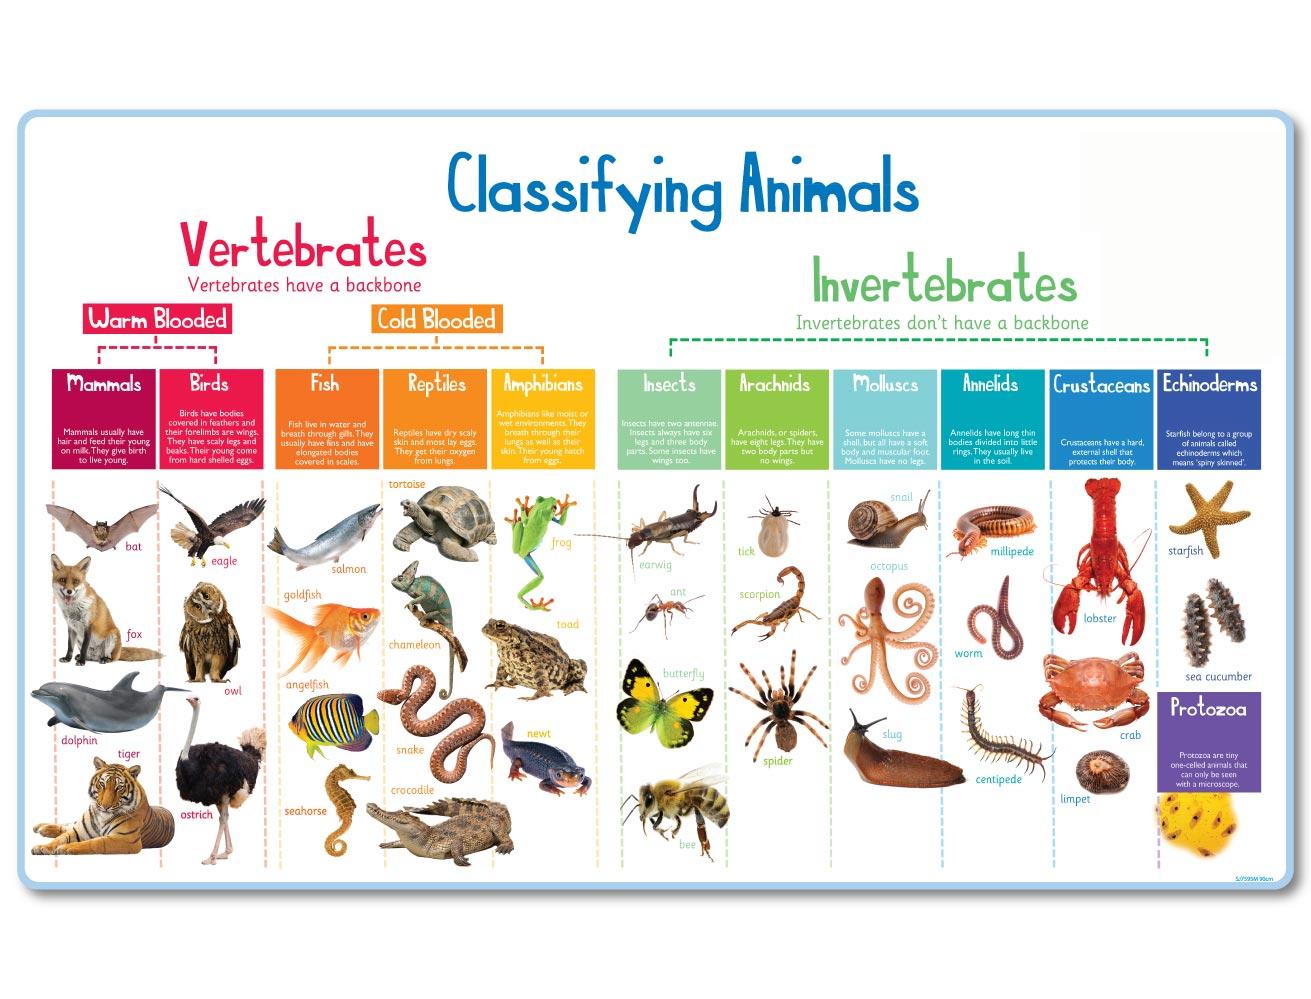 sj7595m-classifying-animals-90cm-amended.jpg